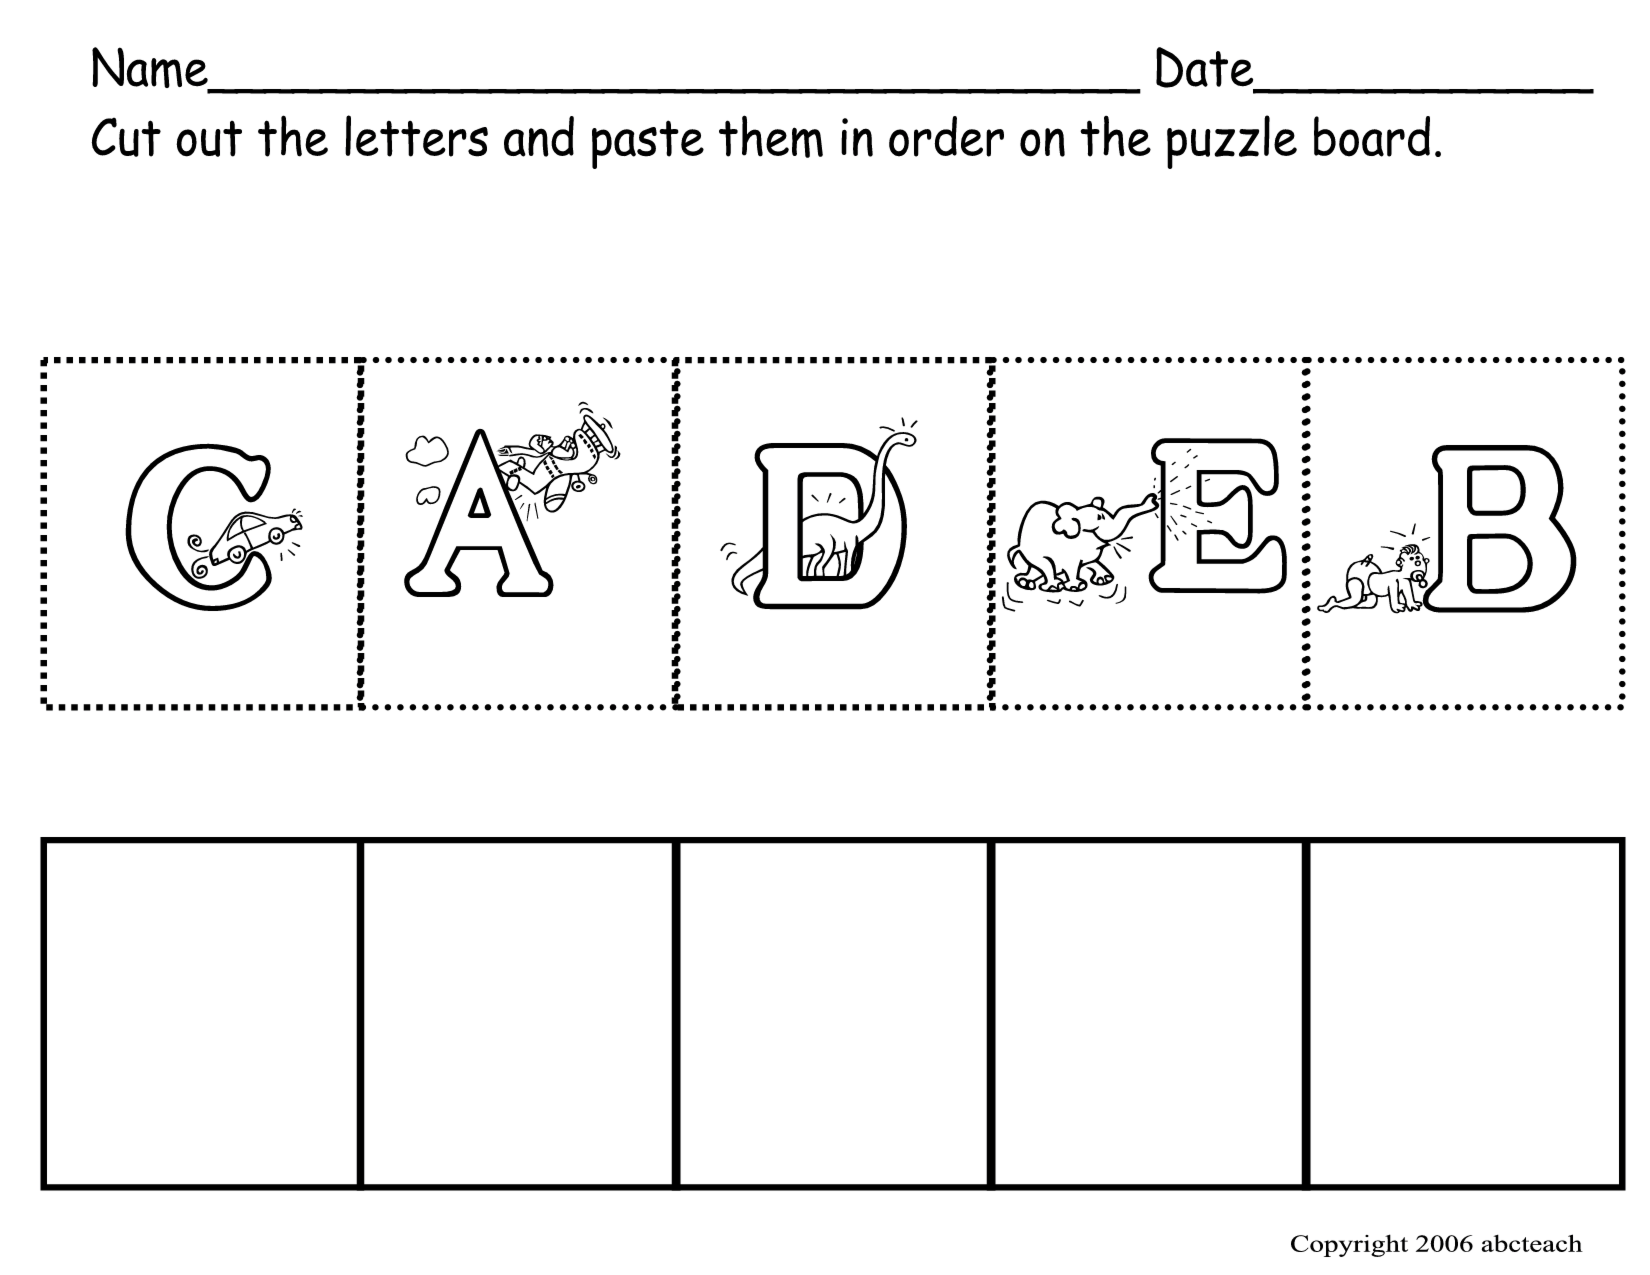 Preschool Alphabet Worksheets Pdf